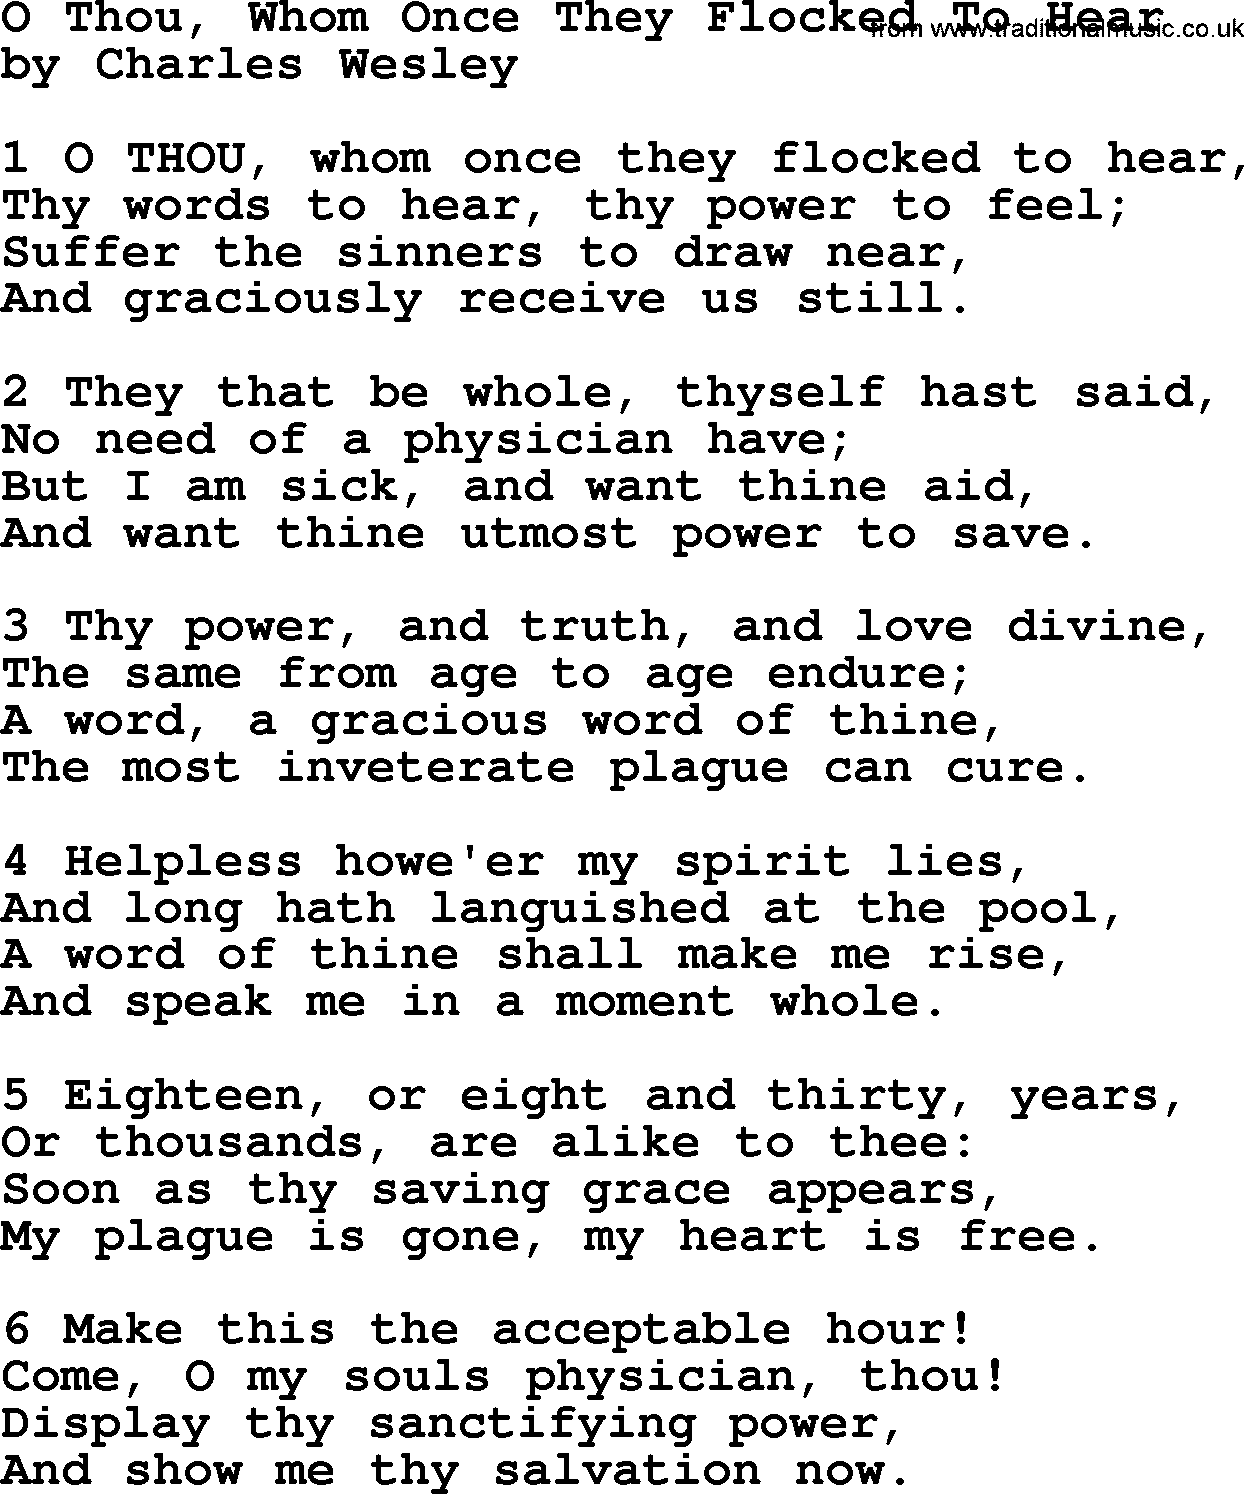 Charles Wesley hymn: O Thou, Whom Once They Flocked To Hear, lyrics